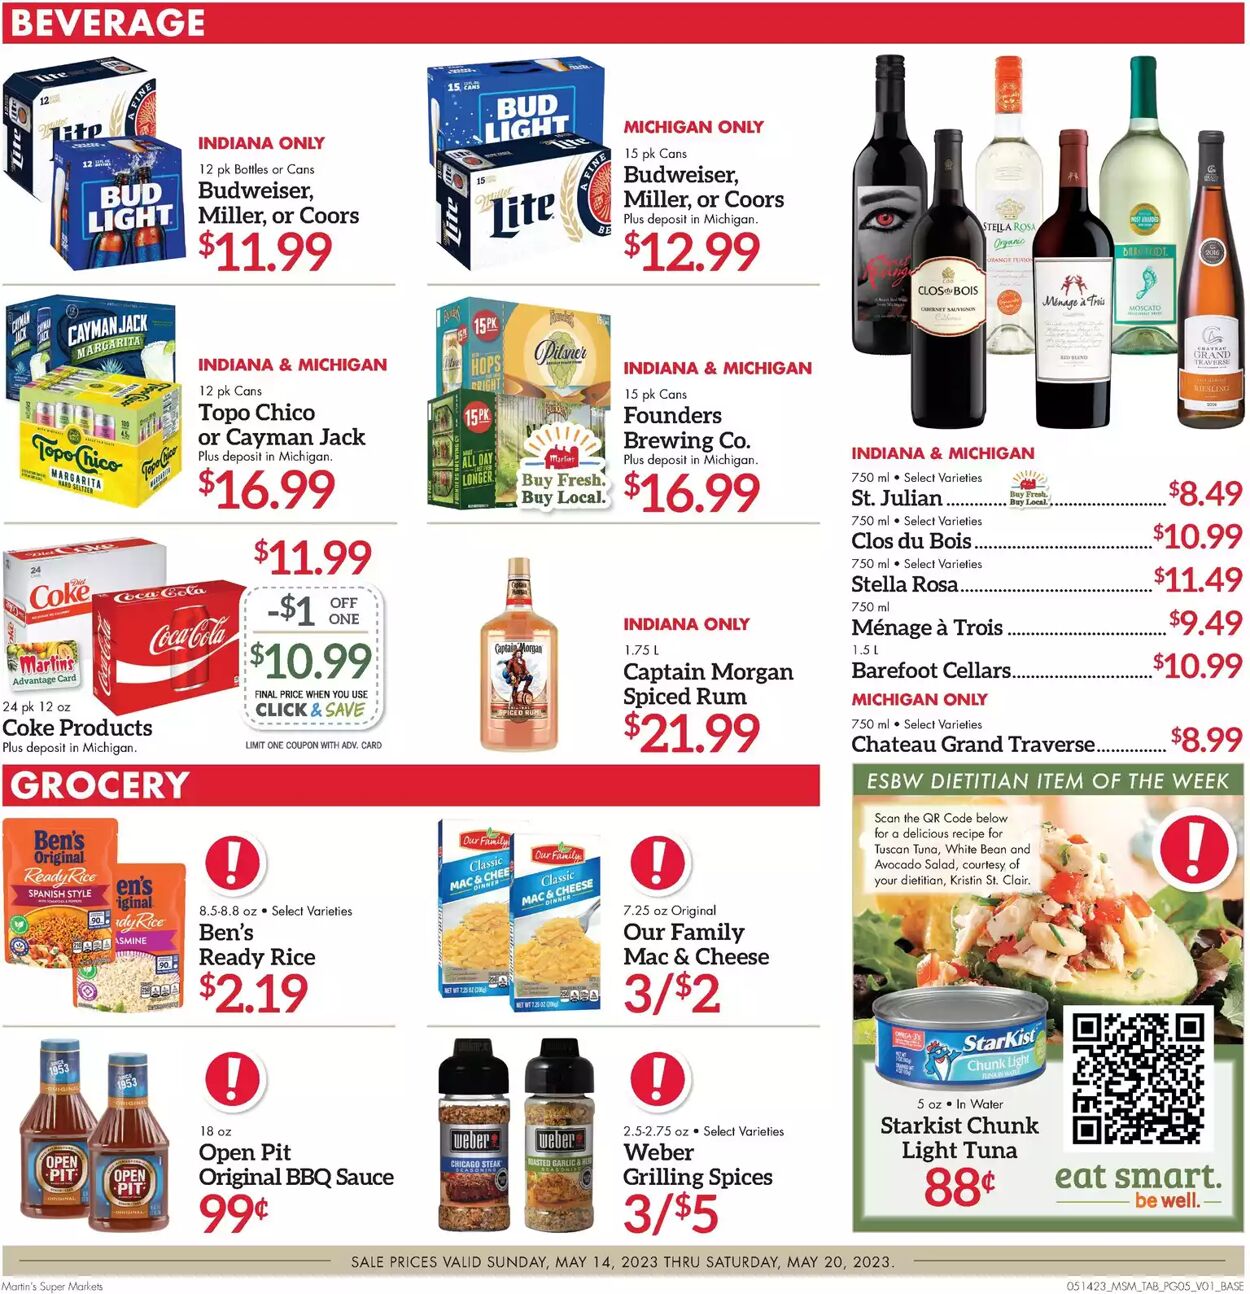 Weekly ad Martin's Supermarkets 05/14/2023 - 05/20/2023